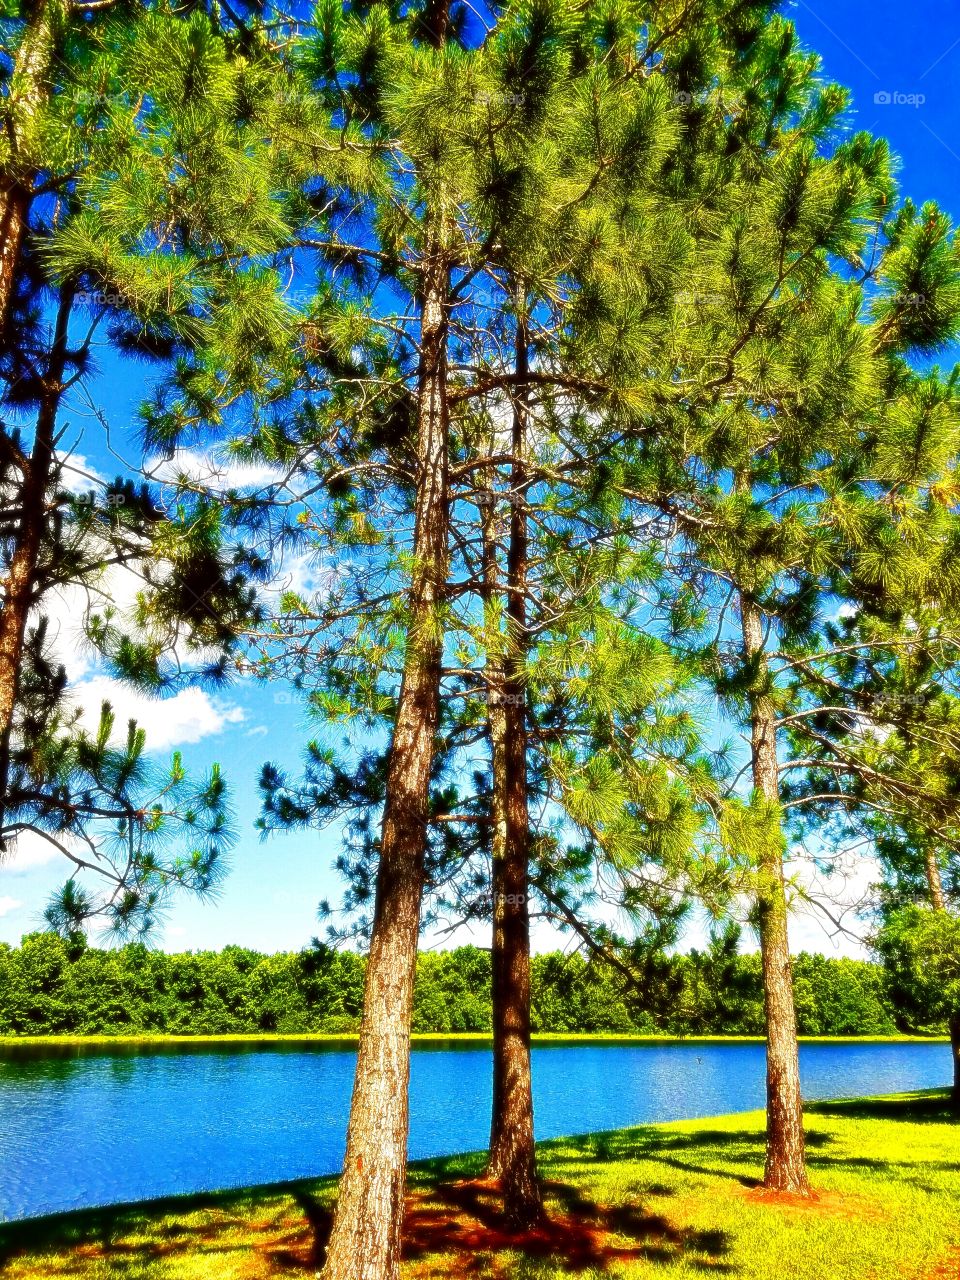 Scenic lake view through the trees